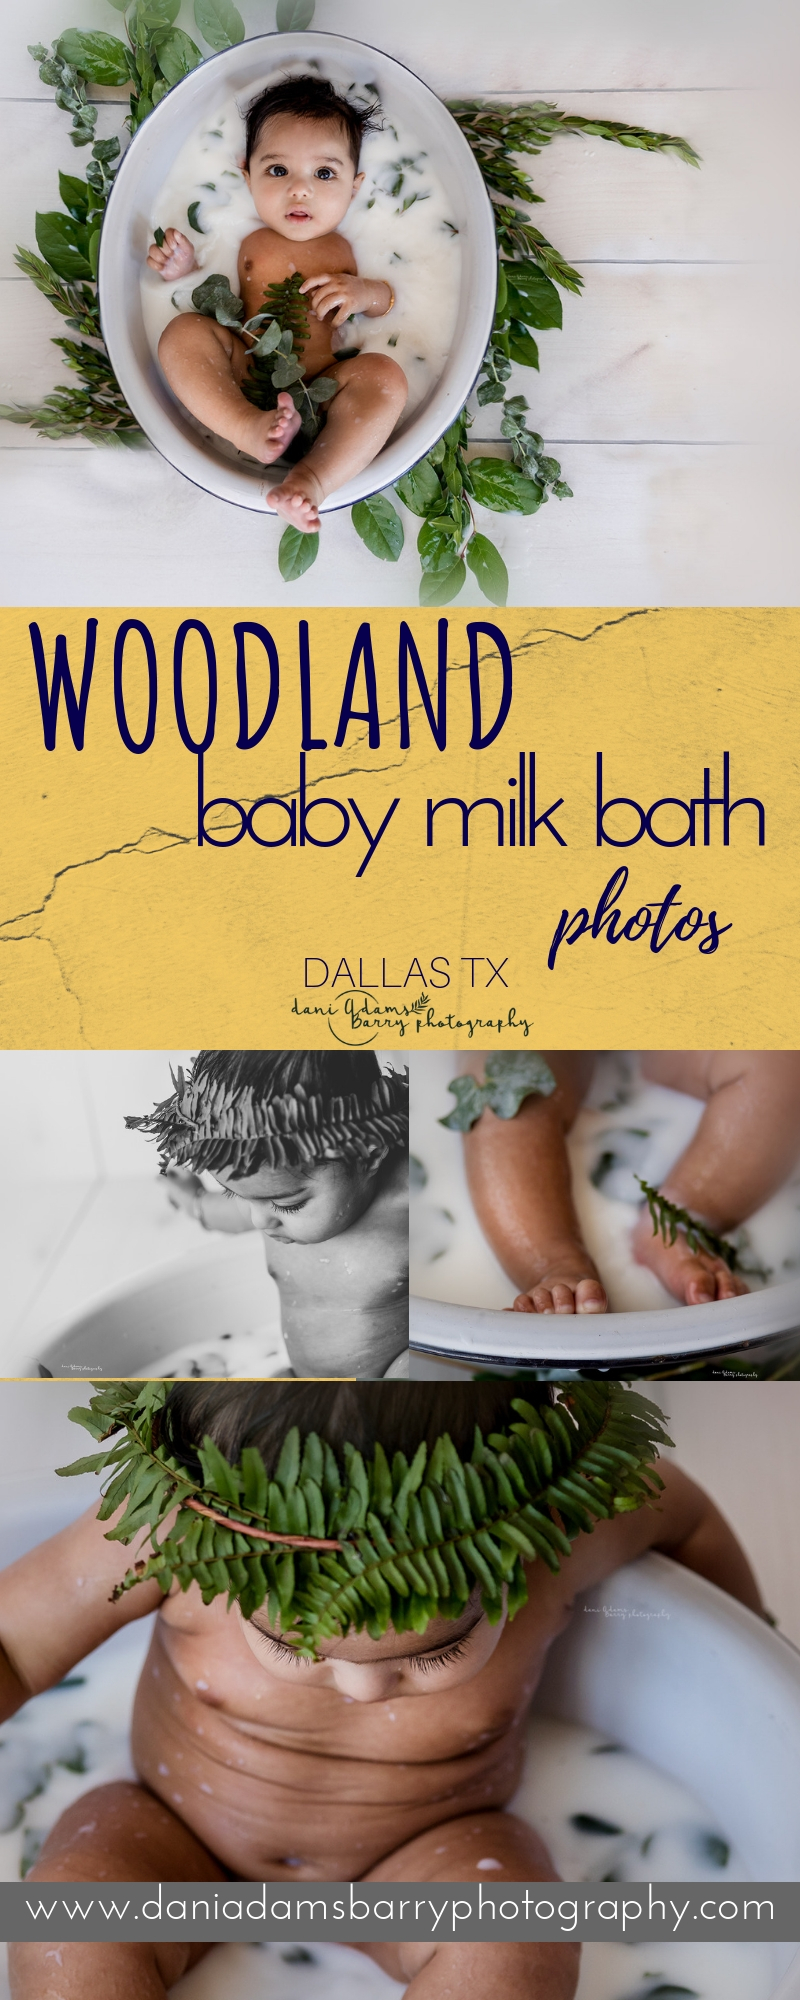 Woodland Baby Milk Bath Photography - Milk Bath Photos and Nature - Boy Milk Bath Photos - Dallas TX Dani Adams Barry Photography